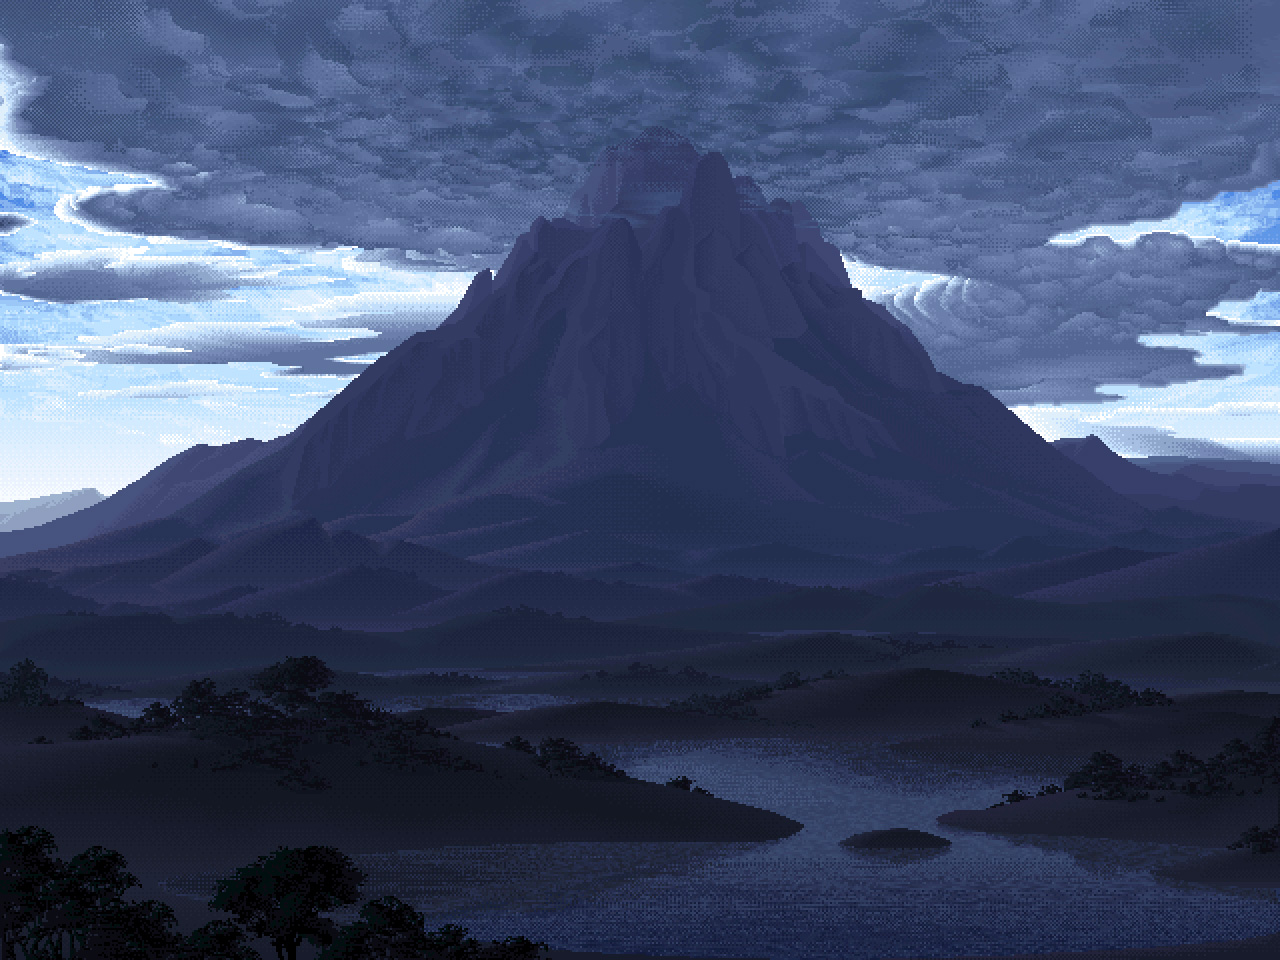 General 1280x960 nature pixel art mountains clouds Mark Ferrari digital art sky landscape hills water